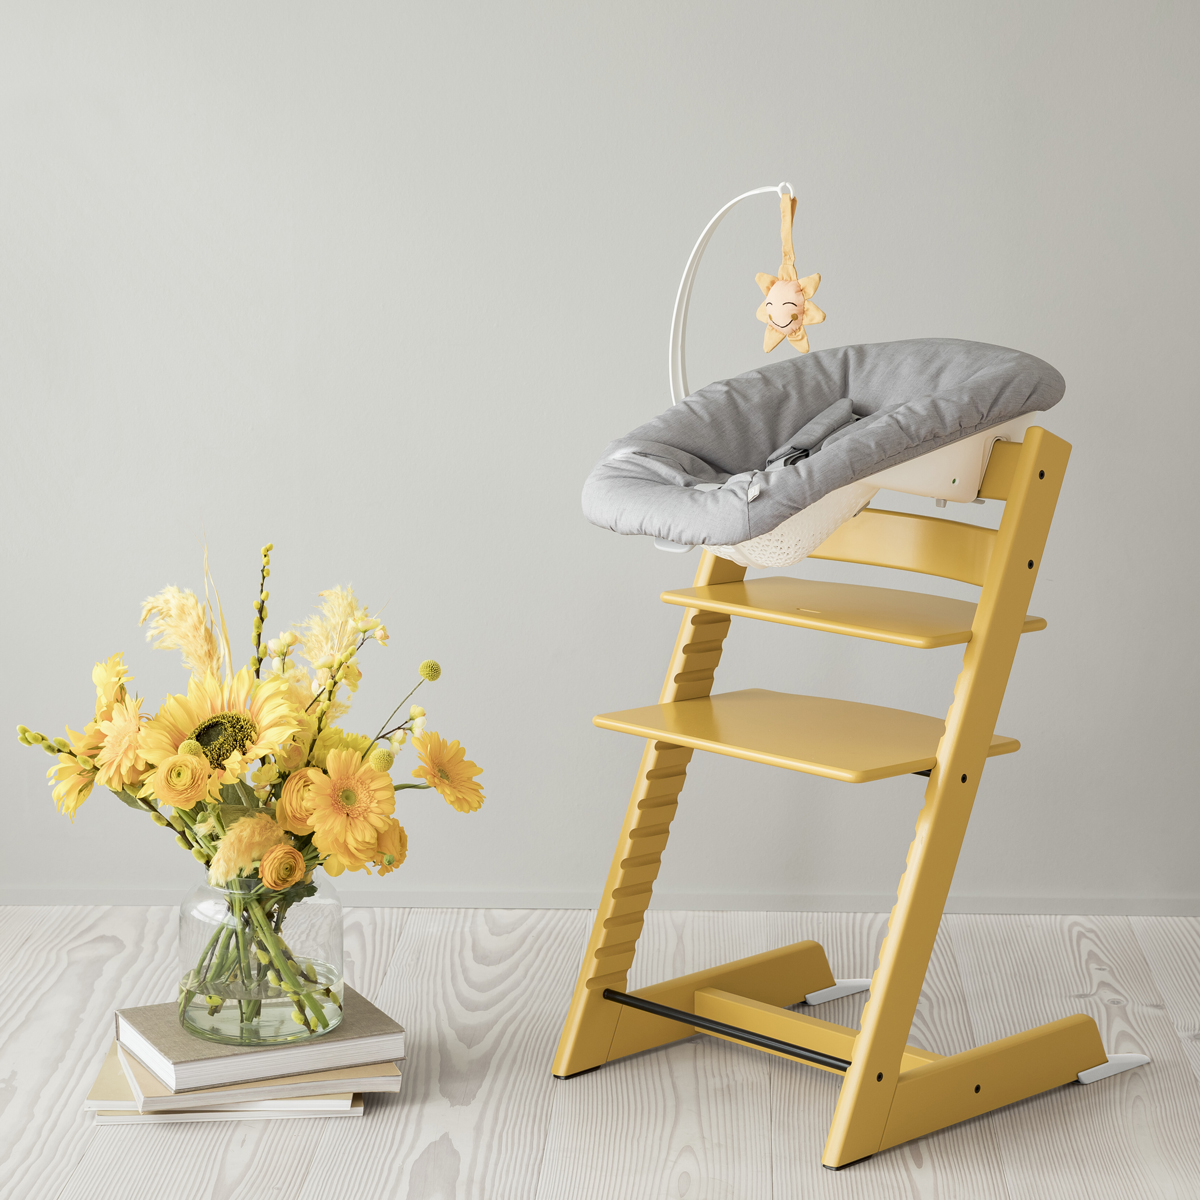 Набор Stokke Newborn Tripp Trapp Sunflower Yellow: стульчик и кресло для новорожденных (k.100137.52) - фото 7